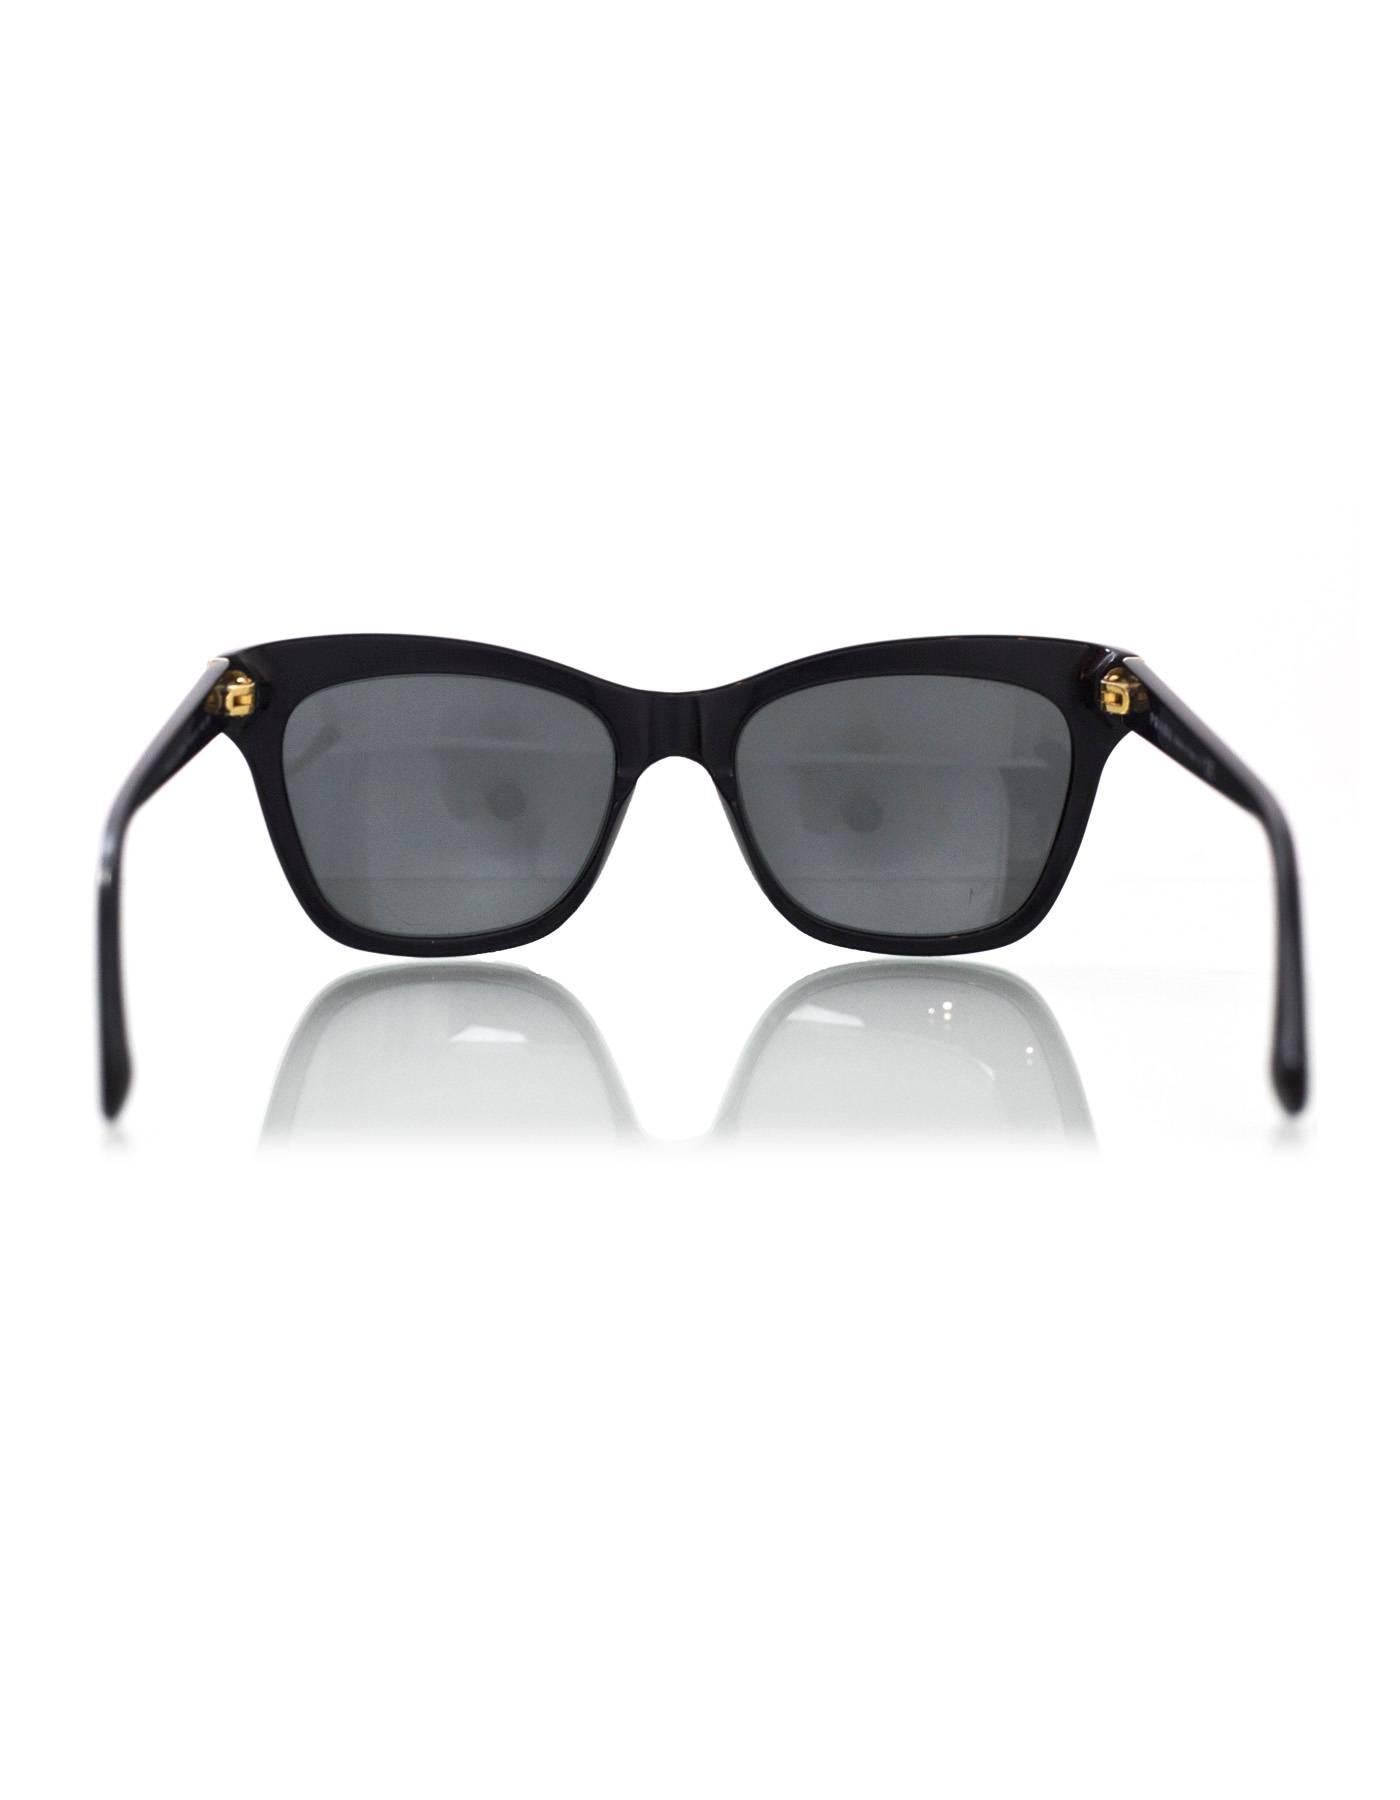 Prada Black Resin Sunglasses with Box and Case 1